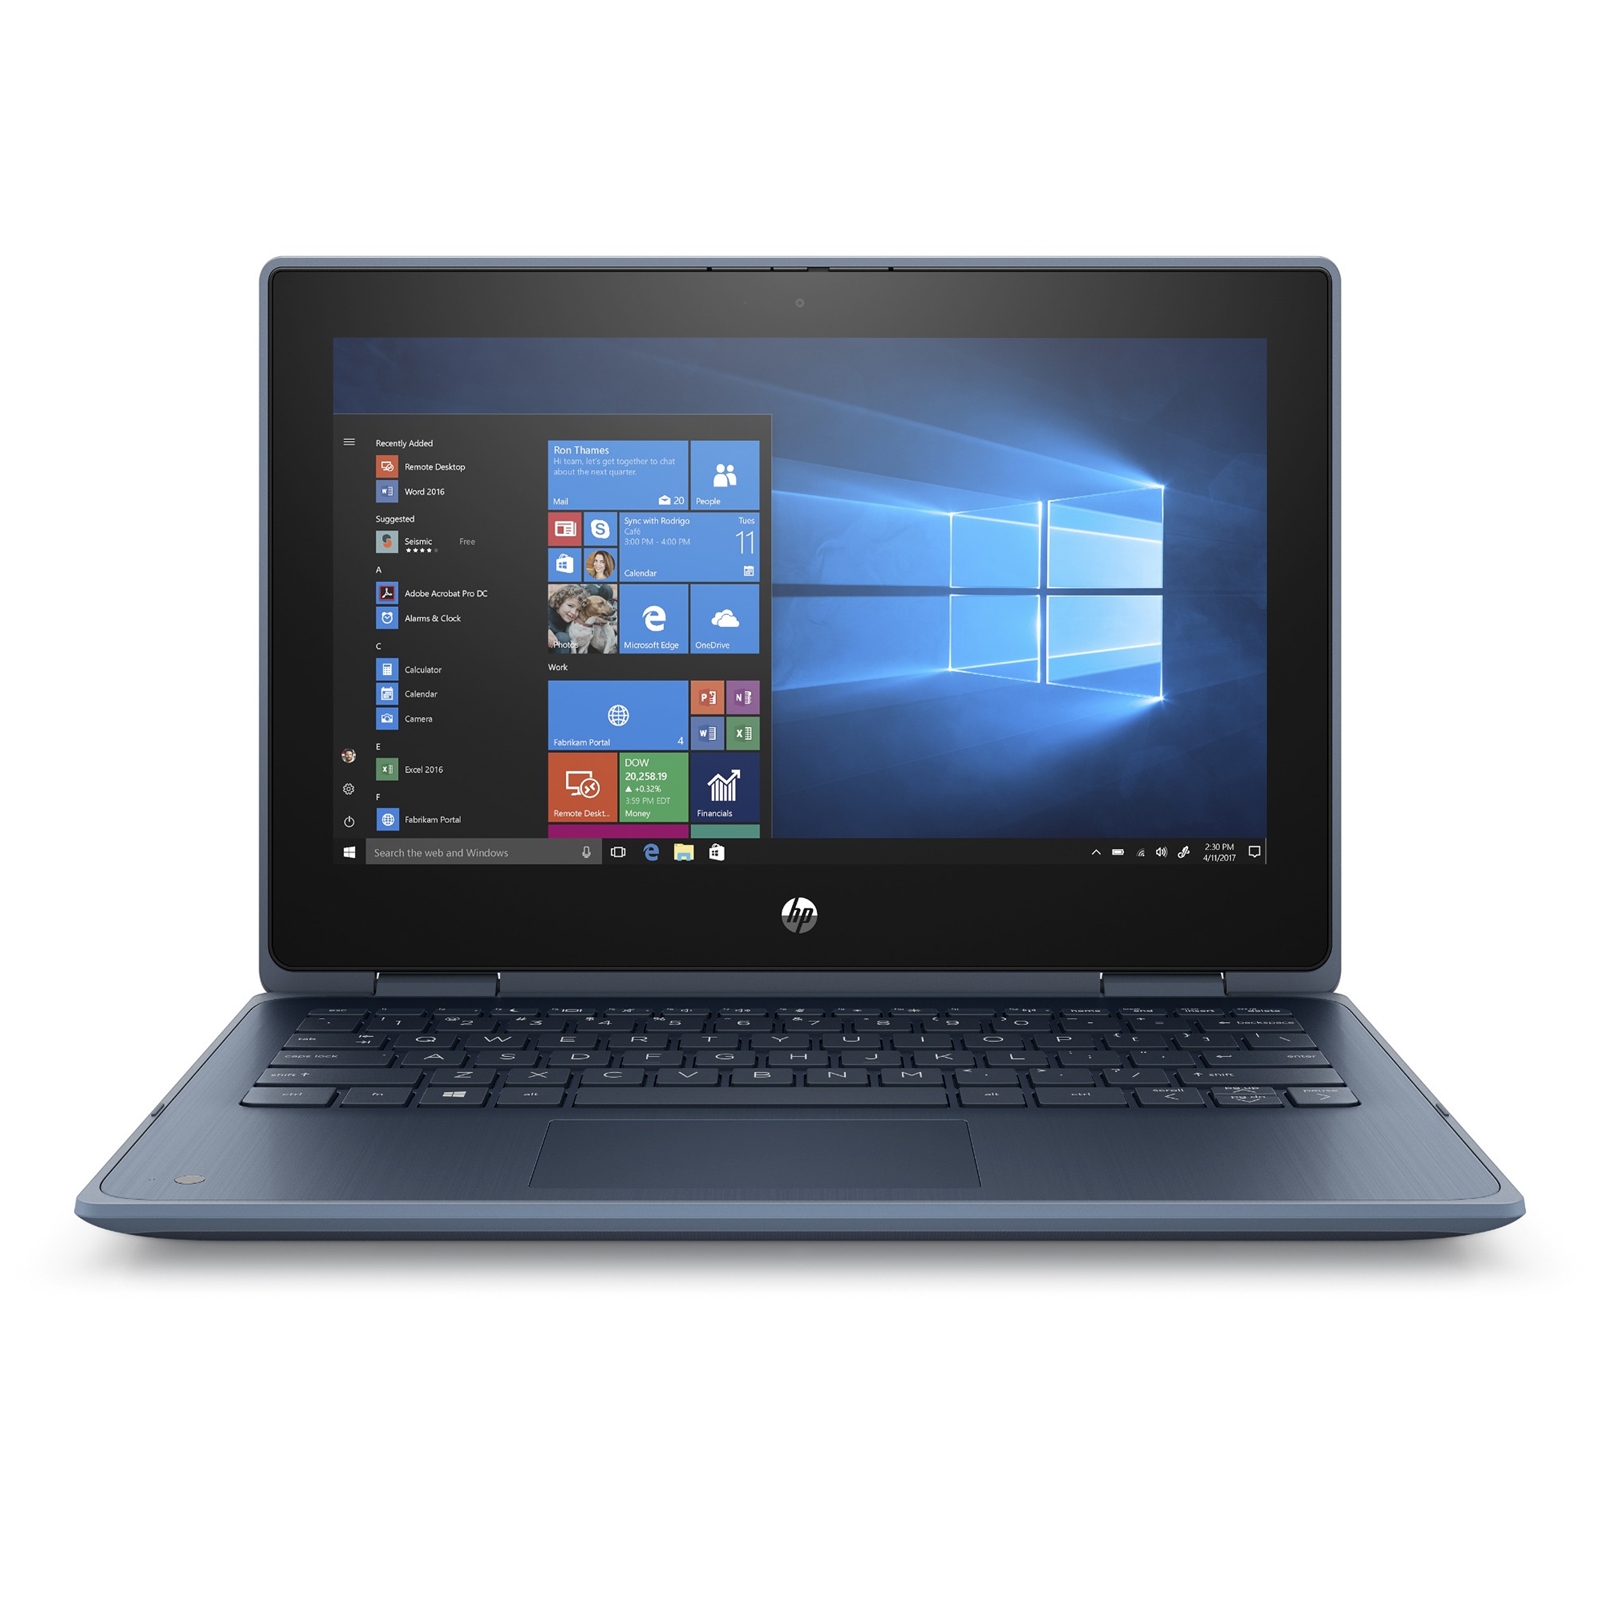 HP ProBook X360 11 G5 213V2ES#ABU Laptop, 11.6 Inch Convertible Touchscreen, Intel Celeron N4020, 4GB RAM, 128GB SSD, Windows 10 Pro